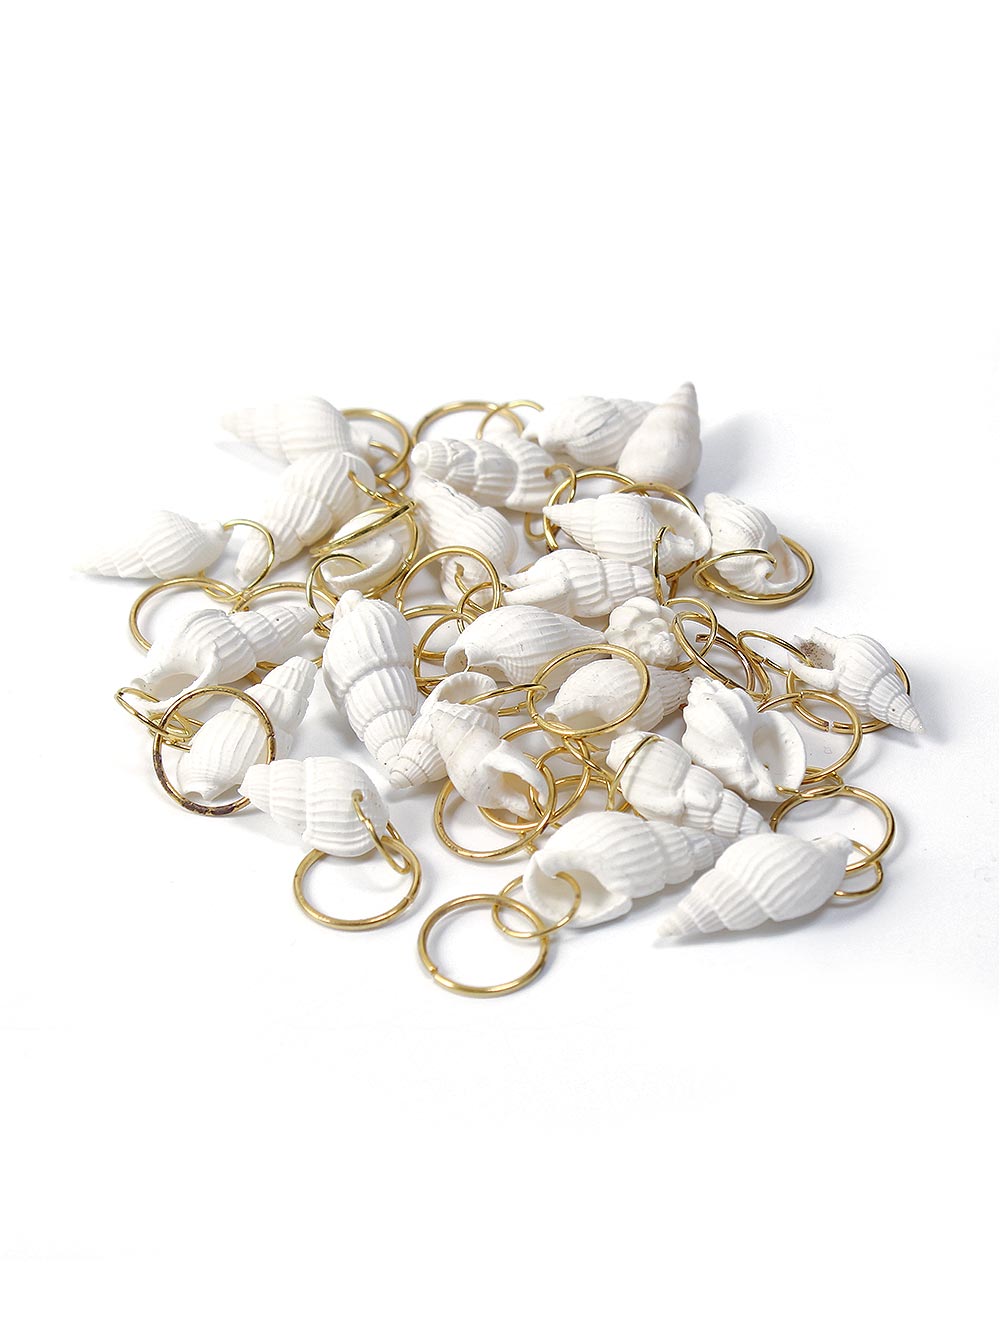 15pcs Beach Shell Conch Style Hair Braid Rings Decorative Dreadlock Braiding Hair Jewelry Beads Charms for Women Men Dreadlock Accessories